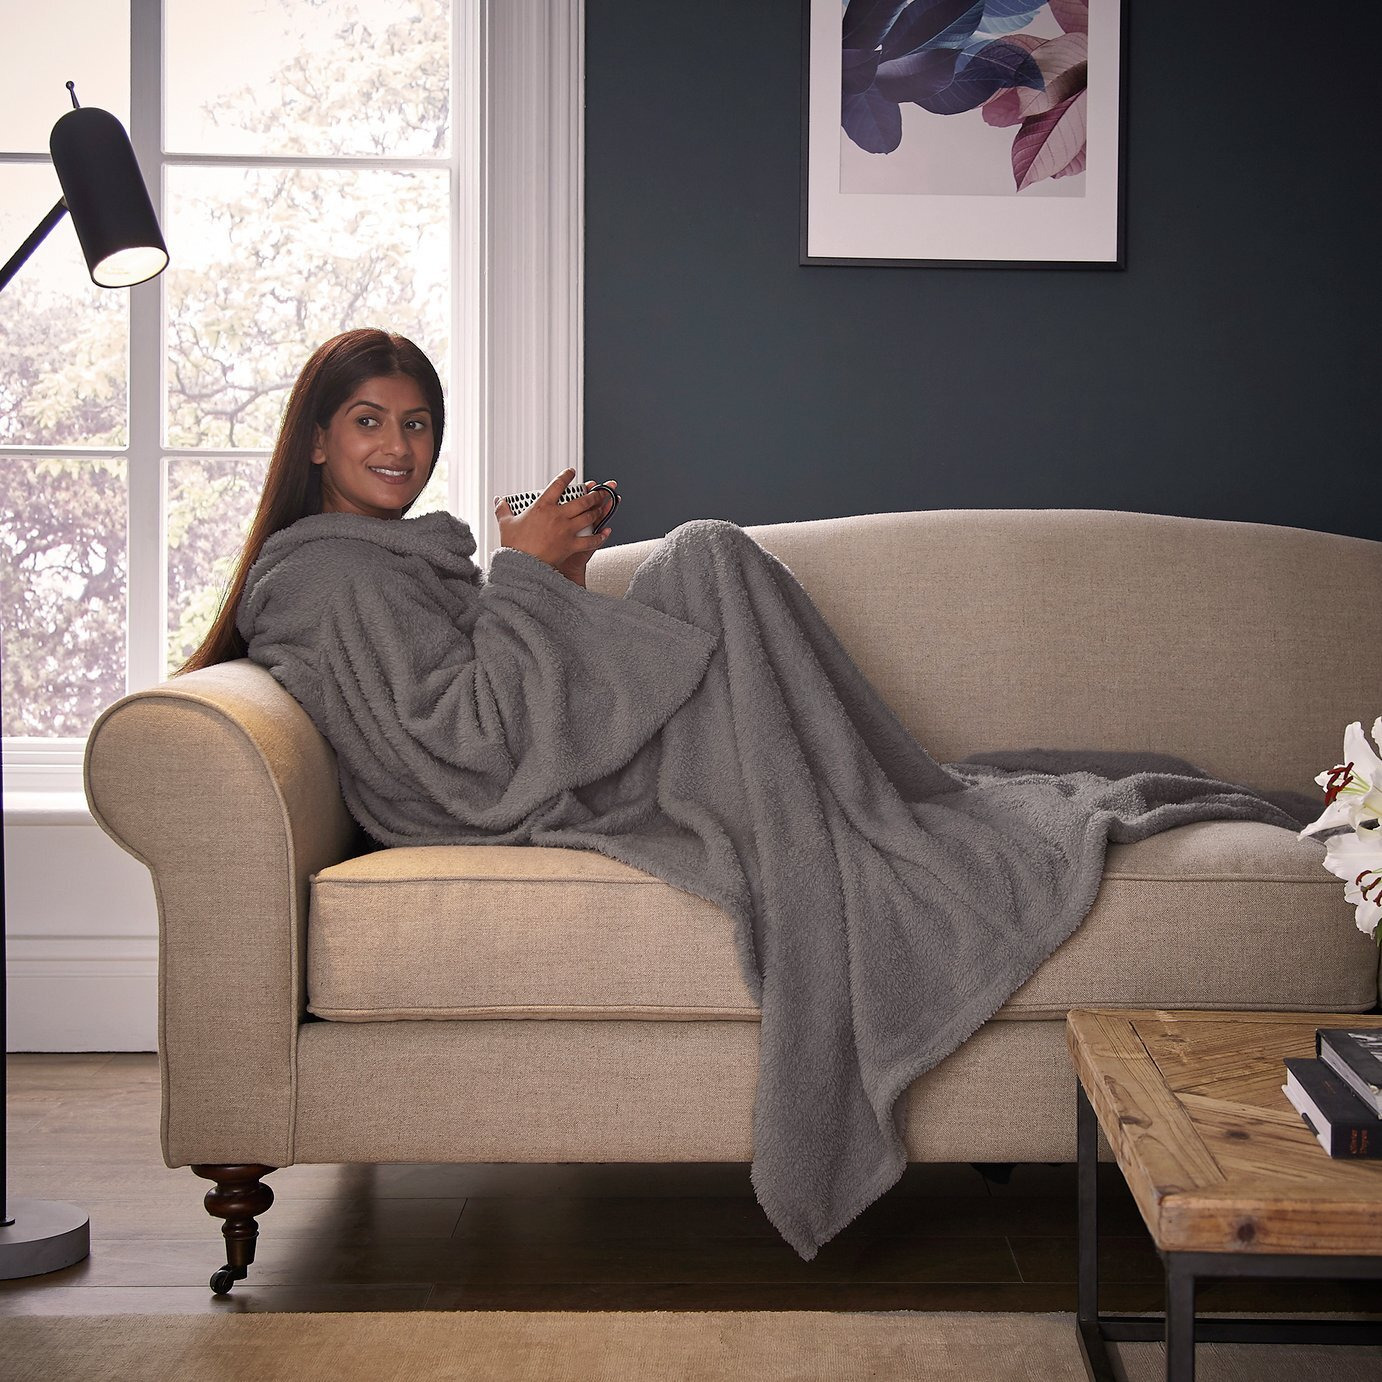 Silentnight Snugsie Wearable Blanket with Sleeves - Grey - image 1